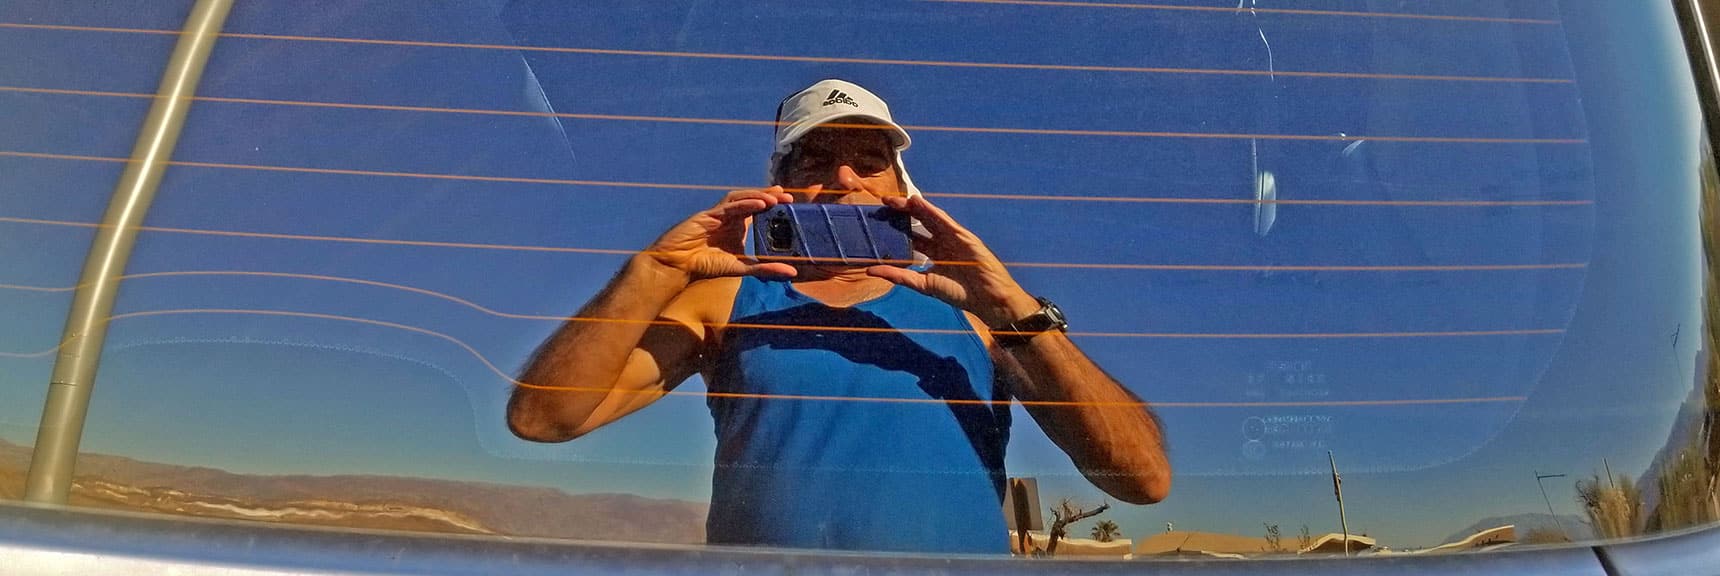 Myself Mirrored in The Beast's (Smart Car) Hatchback Window. | Tea House & Table Rock Circuit | Furnace Creek | Death Valley National Park, California